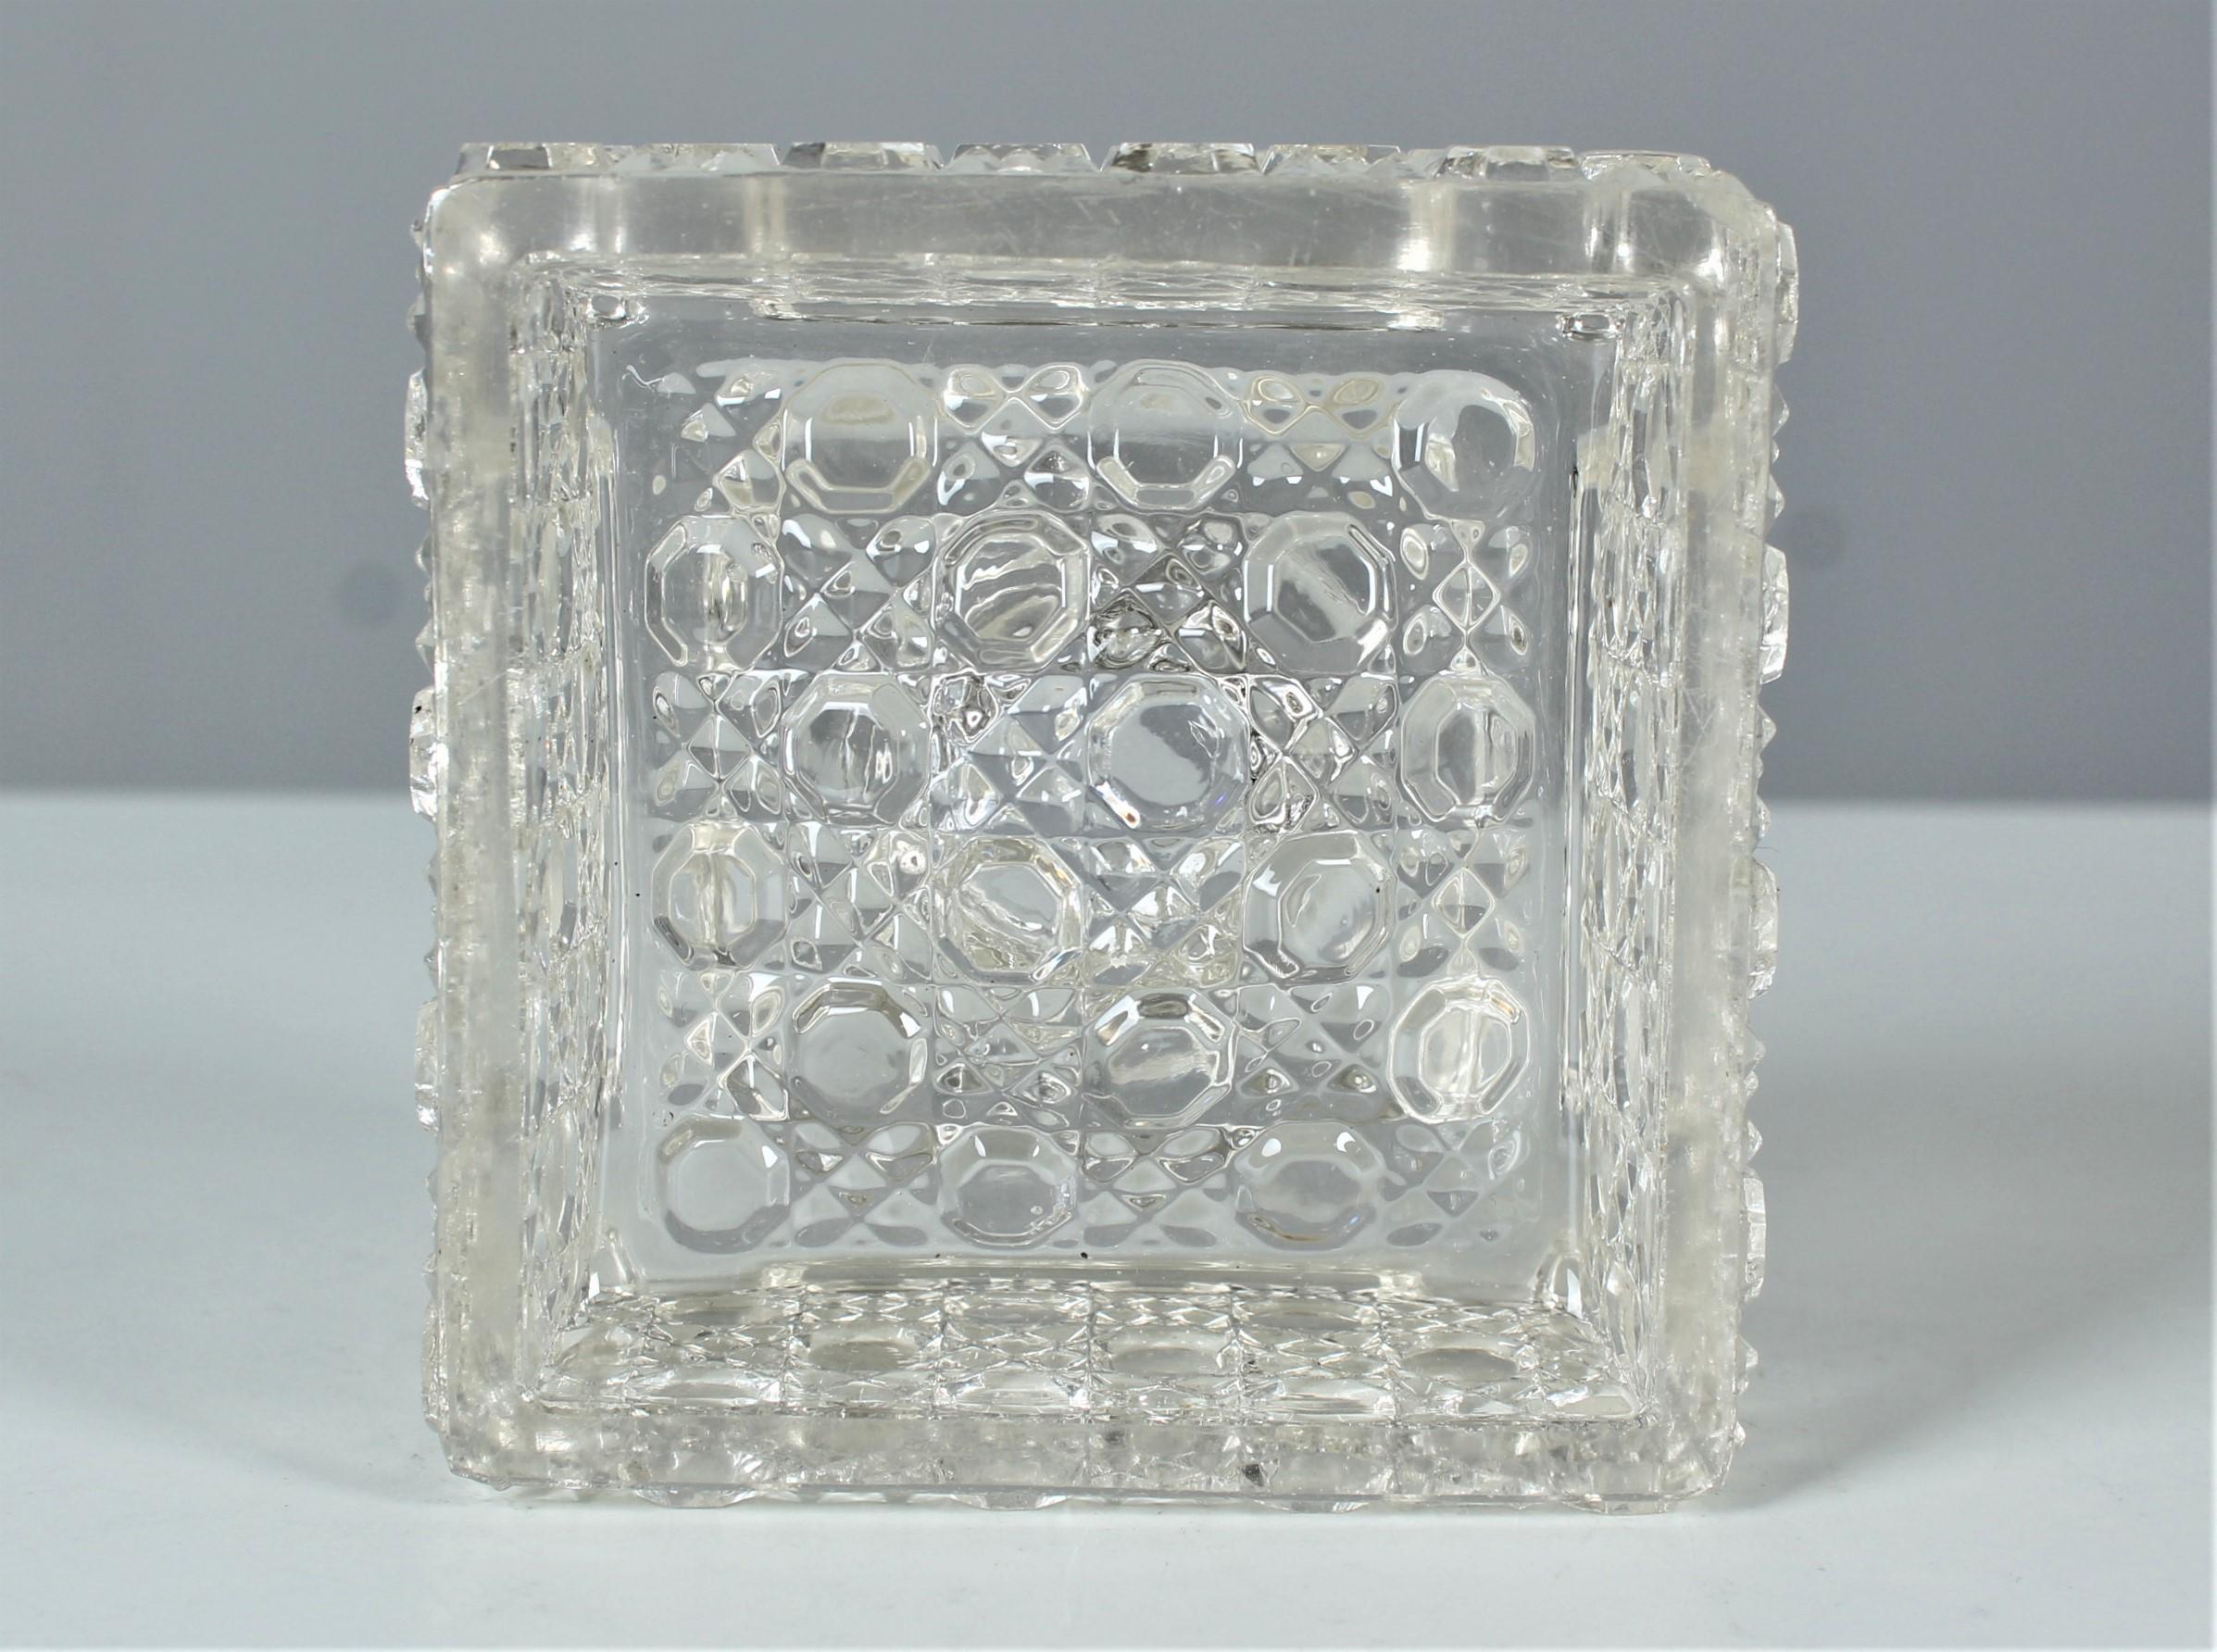 19th Century Antique Baccarat Crystal Glass Inkstand, Pen Holder, Desk Utensil, circa 1880 For Sale